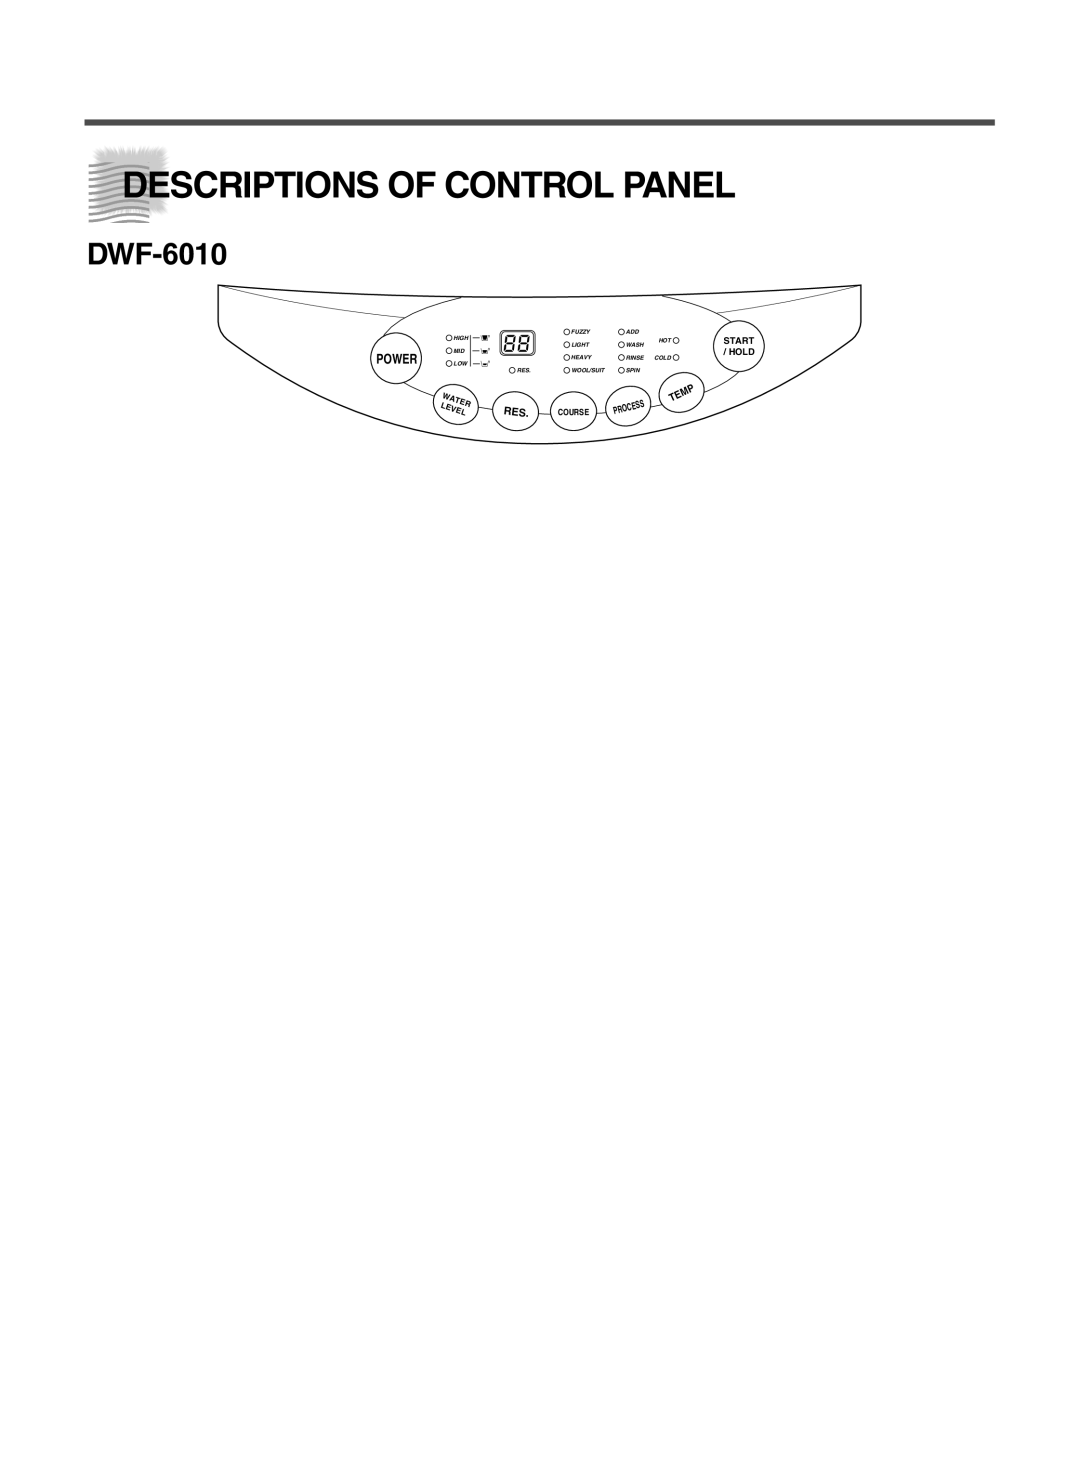 Daewoo DWF-6010 Descriptions Of Control Panel, Power, Start, Temp, Course, Water, Level, Hold, Process, High, Fuzzy, Light 